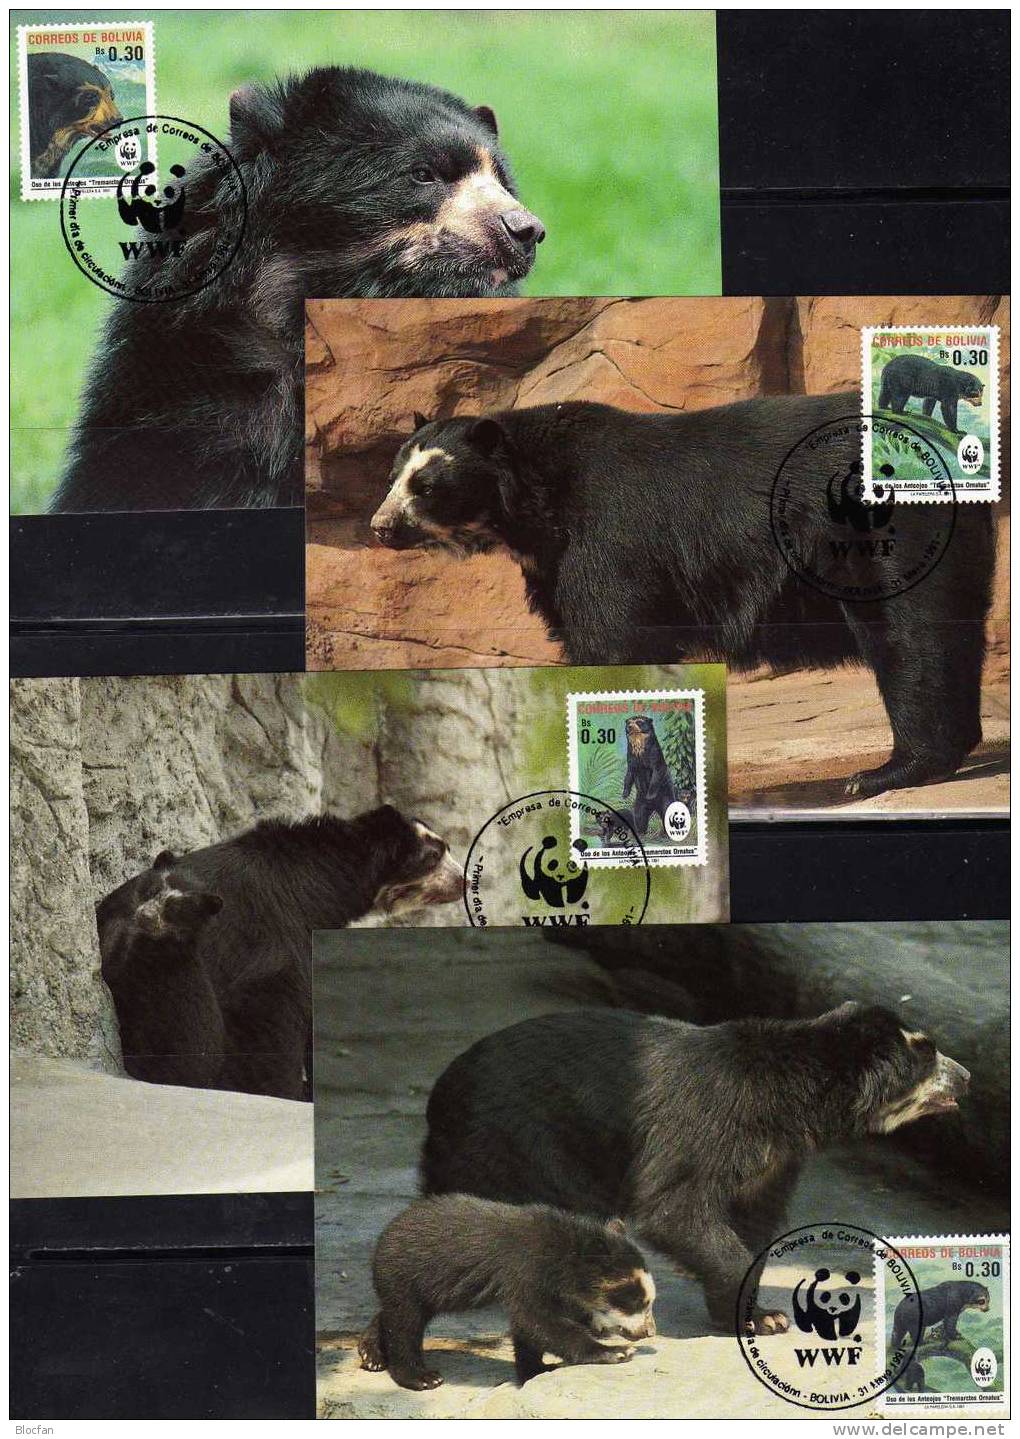 Bär WWF-Set 113 Bolivien 1137/0 **,4 FDC+4 MKt. 28CHF Brillenbär Dokumentation 1991 Wildlife Covers/card BOLIVIA America - Collections (with Albums)